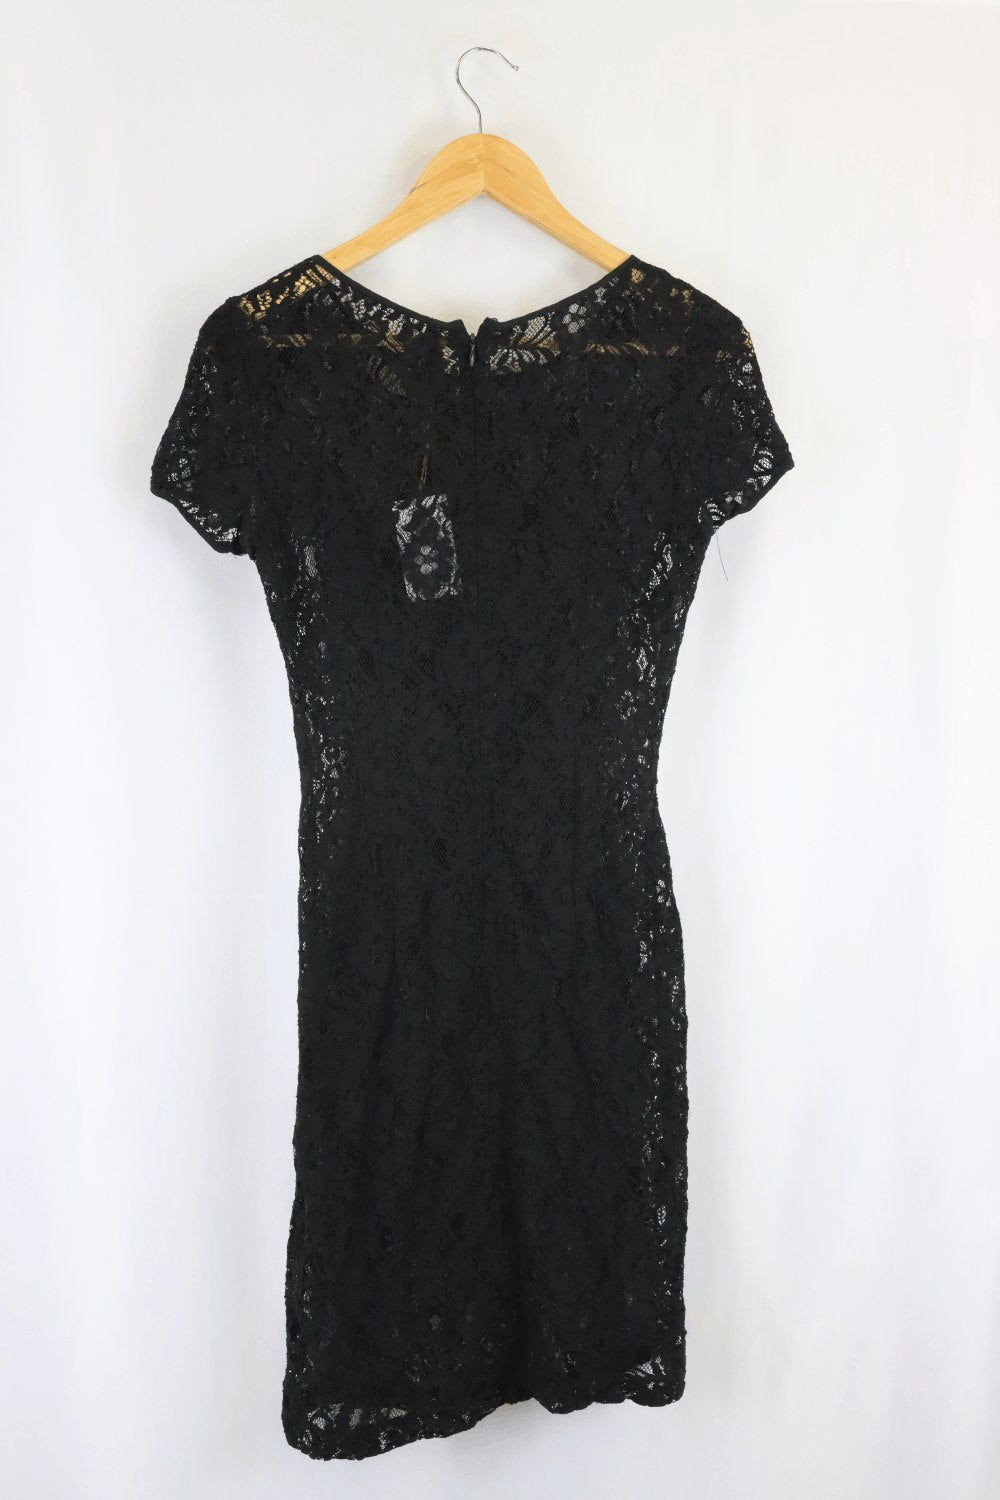 Saba Black Lace Dress 6